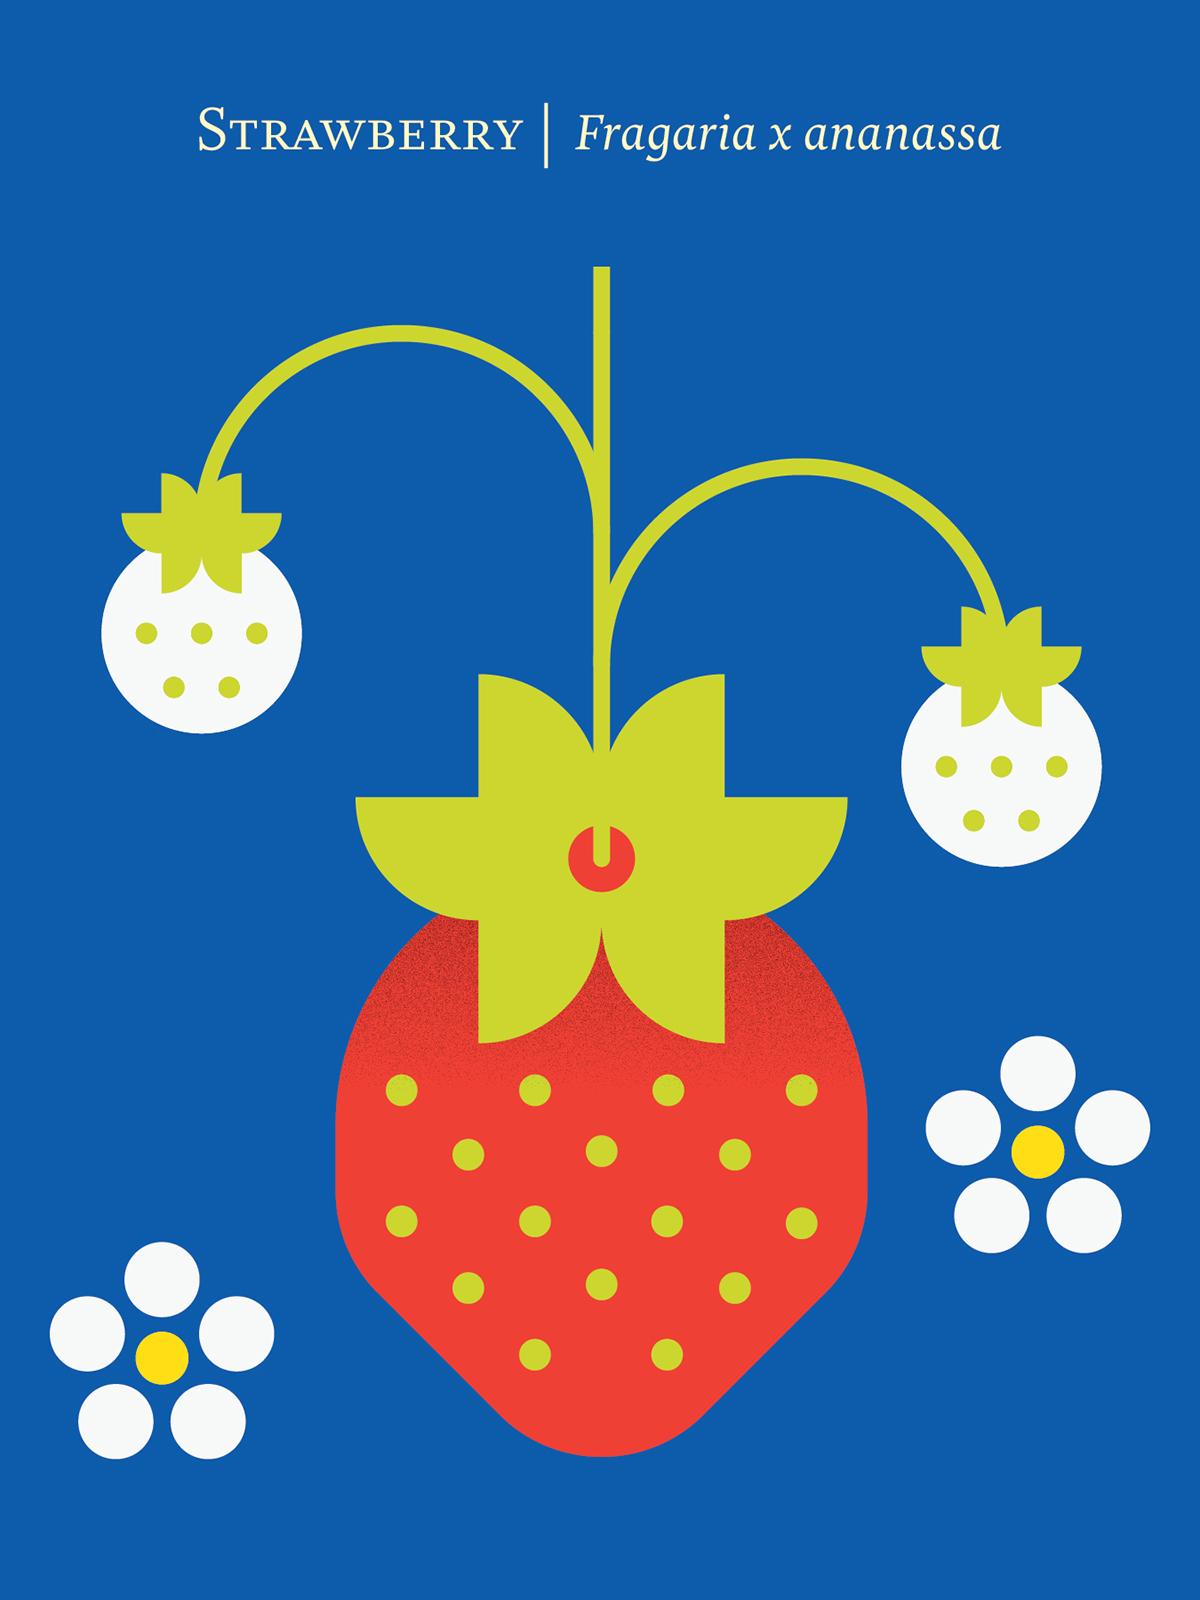 Fruit blueberry strawberry peach papaya watermelon Fruit Icon fruit poster Fruit Illustration Pear Pineapple stamp pomegranate persimmon lemon modern fruit fruit packaging Scandinavian design Minimalist Poster minimalist design Geometric Art